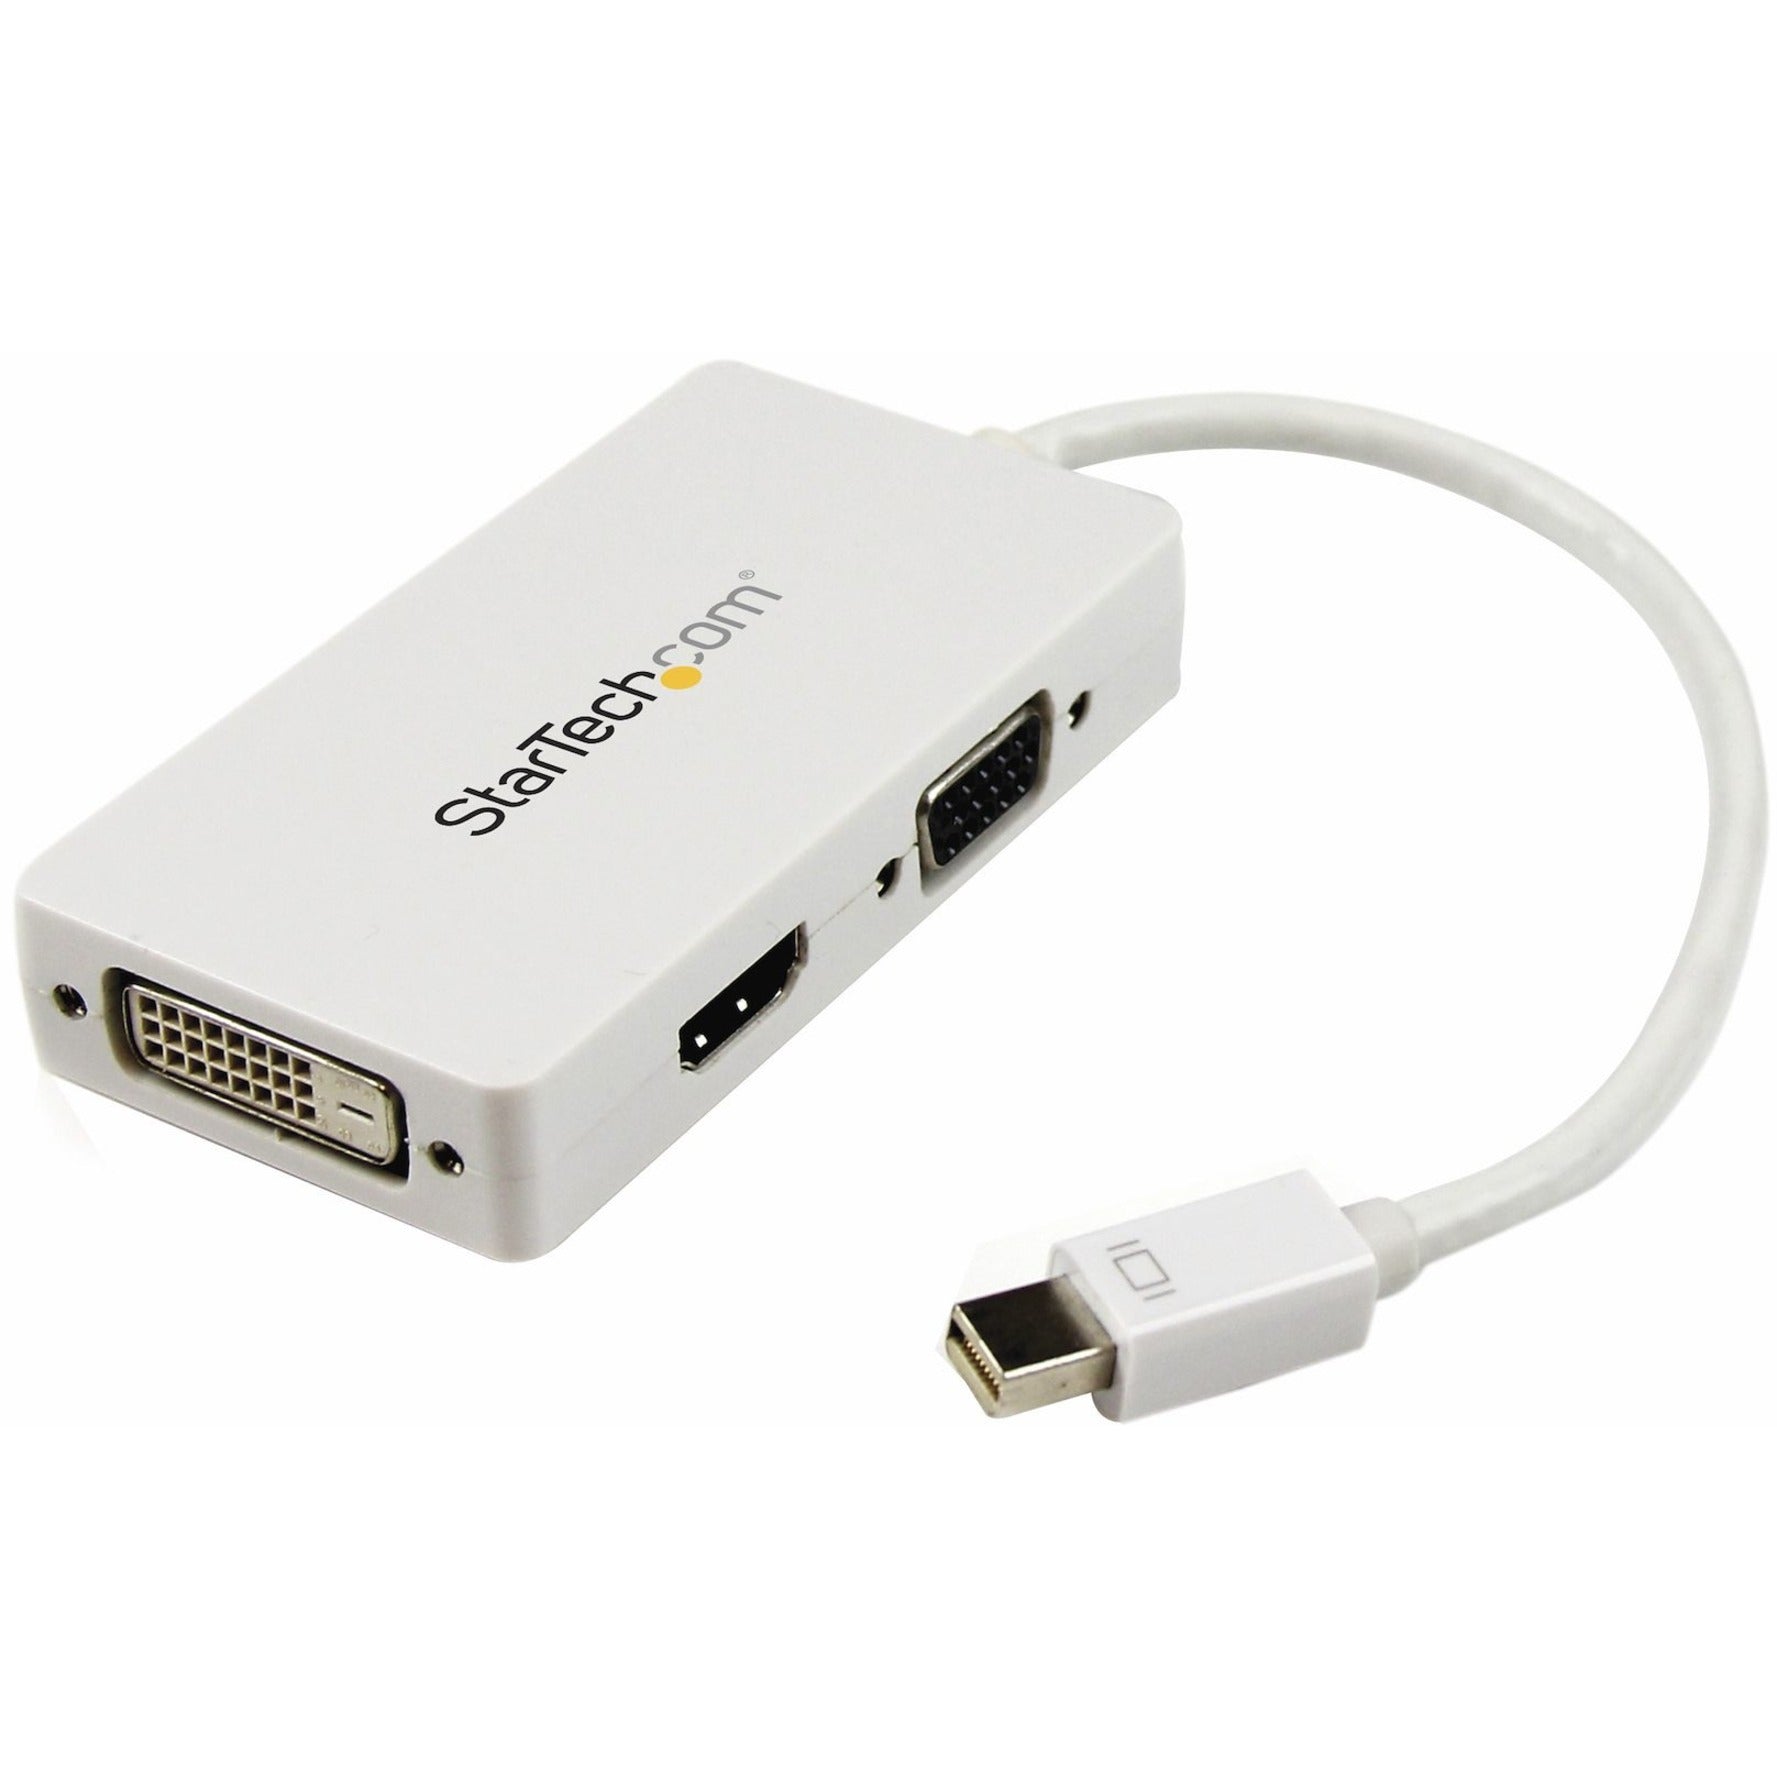 StarTech.com Adaptador de A/V de Viaje MDP2VGDVHDW: Convertidor Mini DisplayPort a VGA DVI o HDMI 3 en 1 Blanco. Marca: StarTech.com. Traduce "Travel" "Adapter" "Mini" "Converter" y "White."